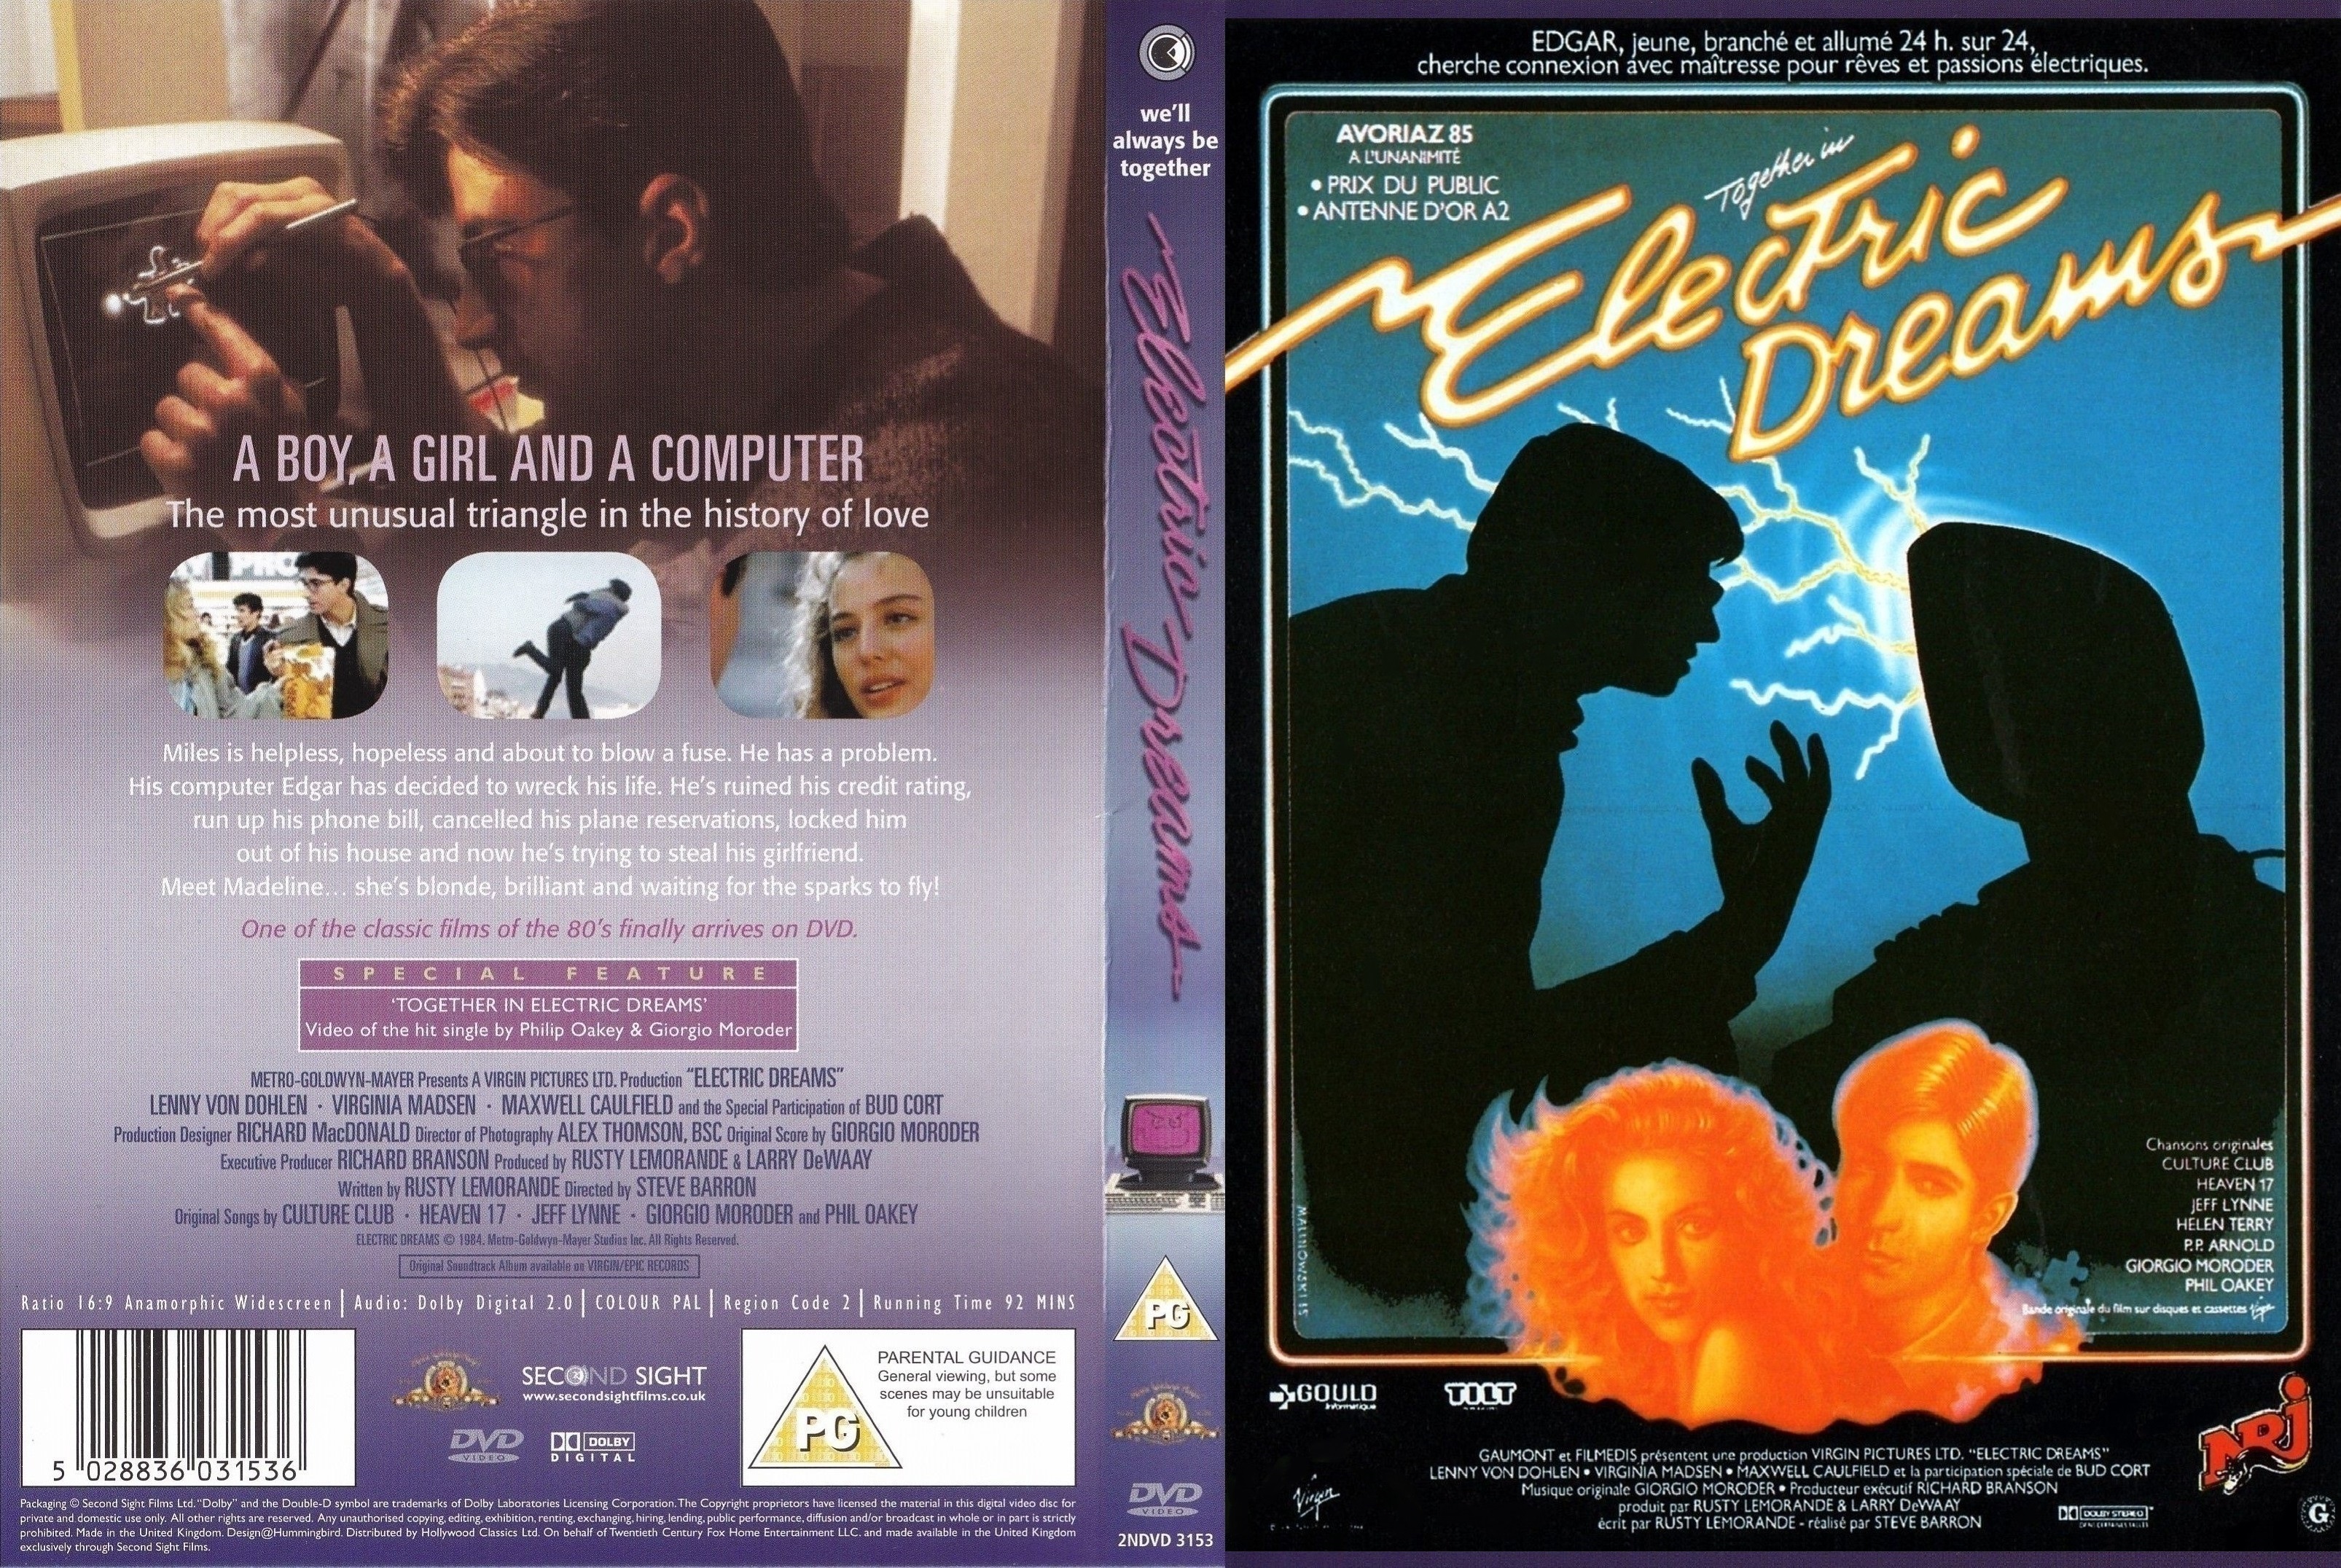 Jaquette DVD Electric Dreams custom